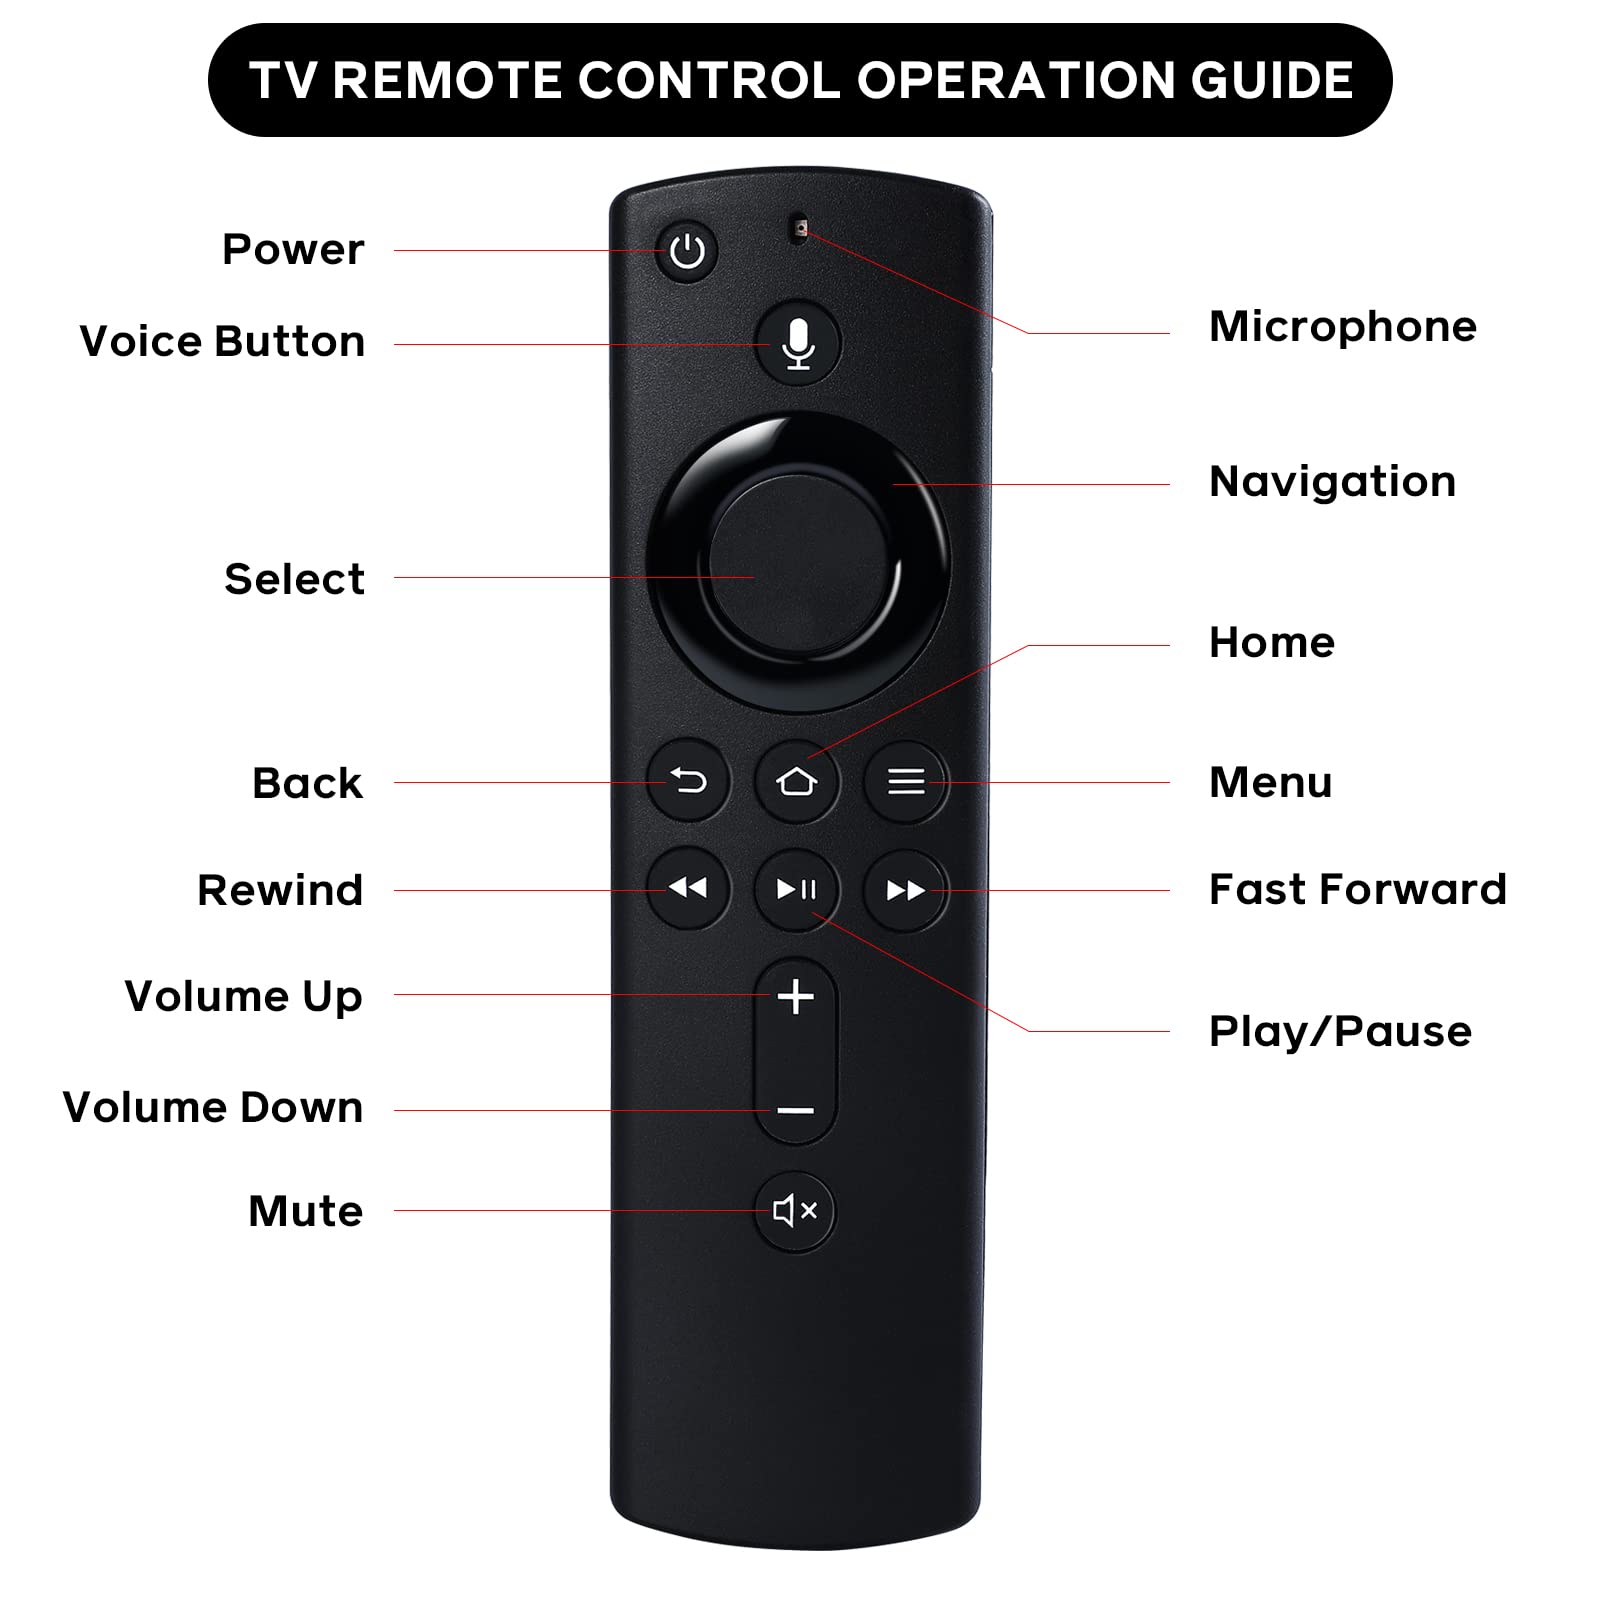 L5B83H Voice Remote Control Replacement for Fire TV Stick Lite,Fire TV Strick,Fire TV Cube